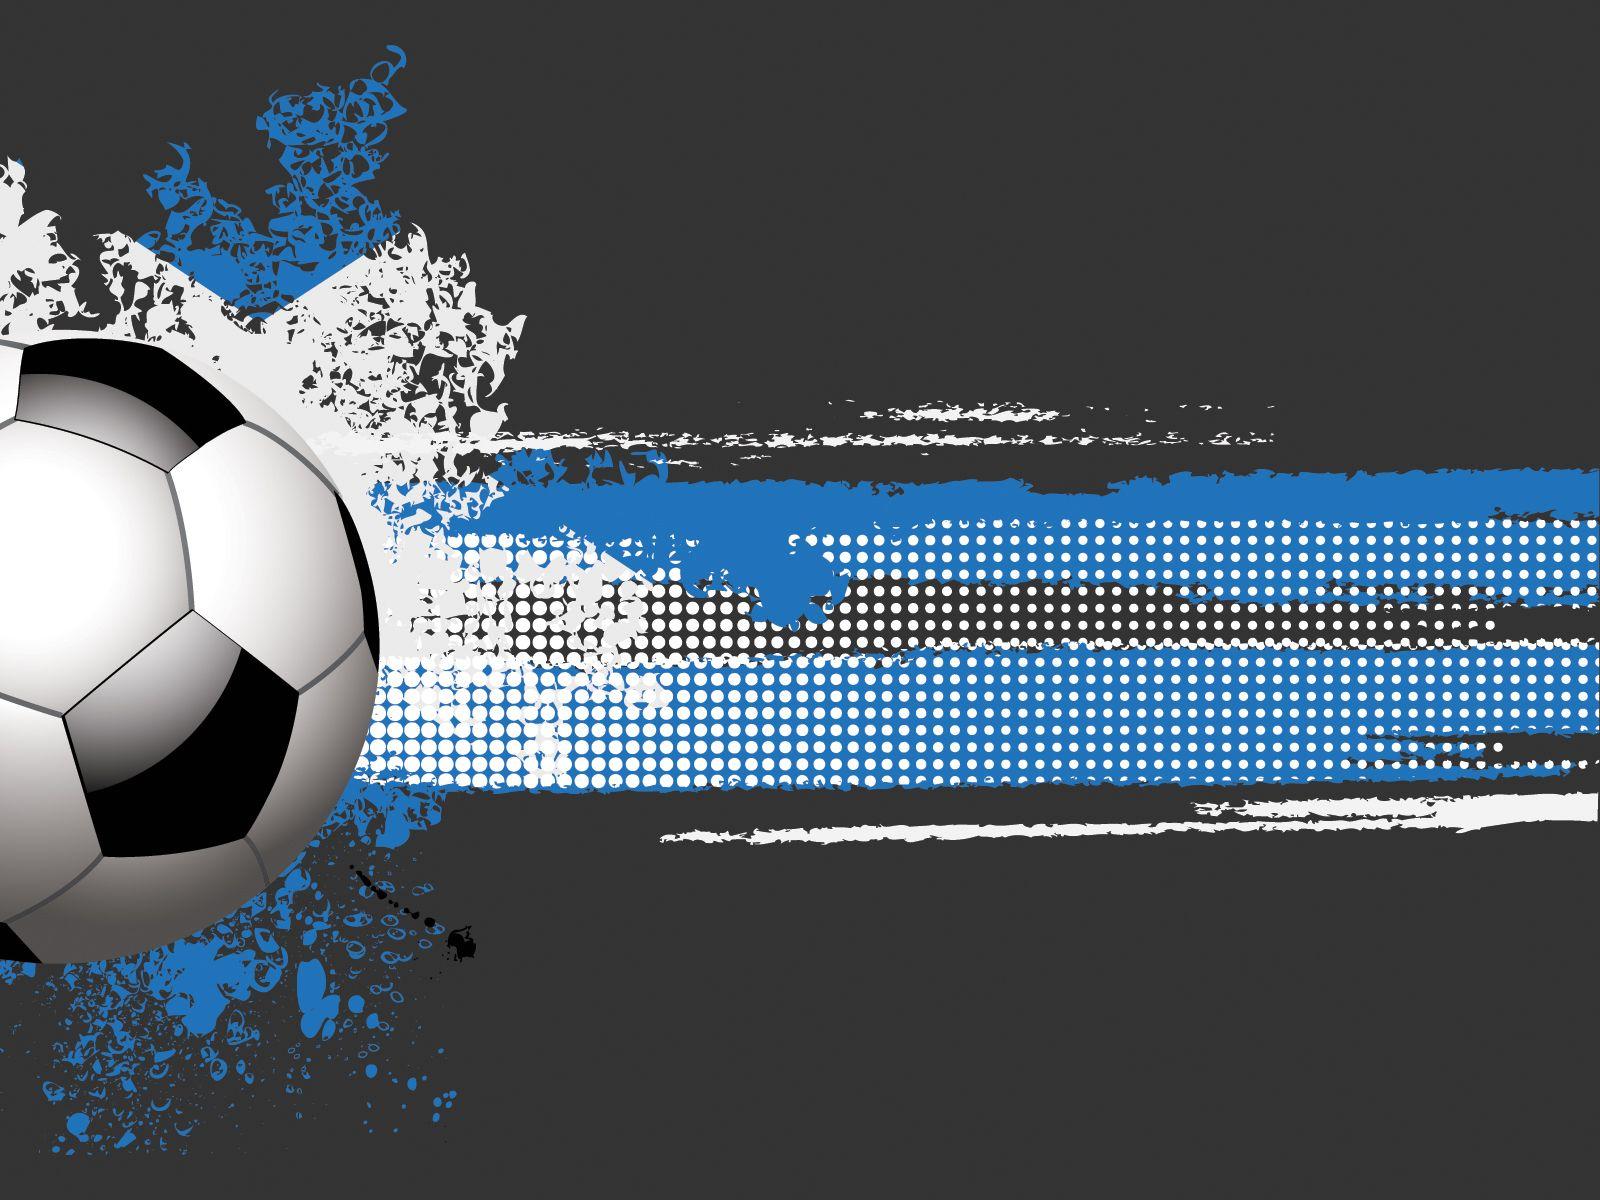 Football or Soccer Ball Powerpoint / Cyan, Black